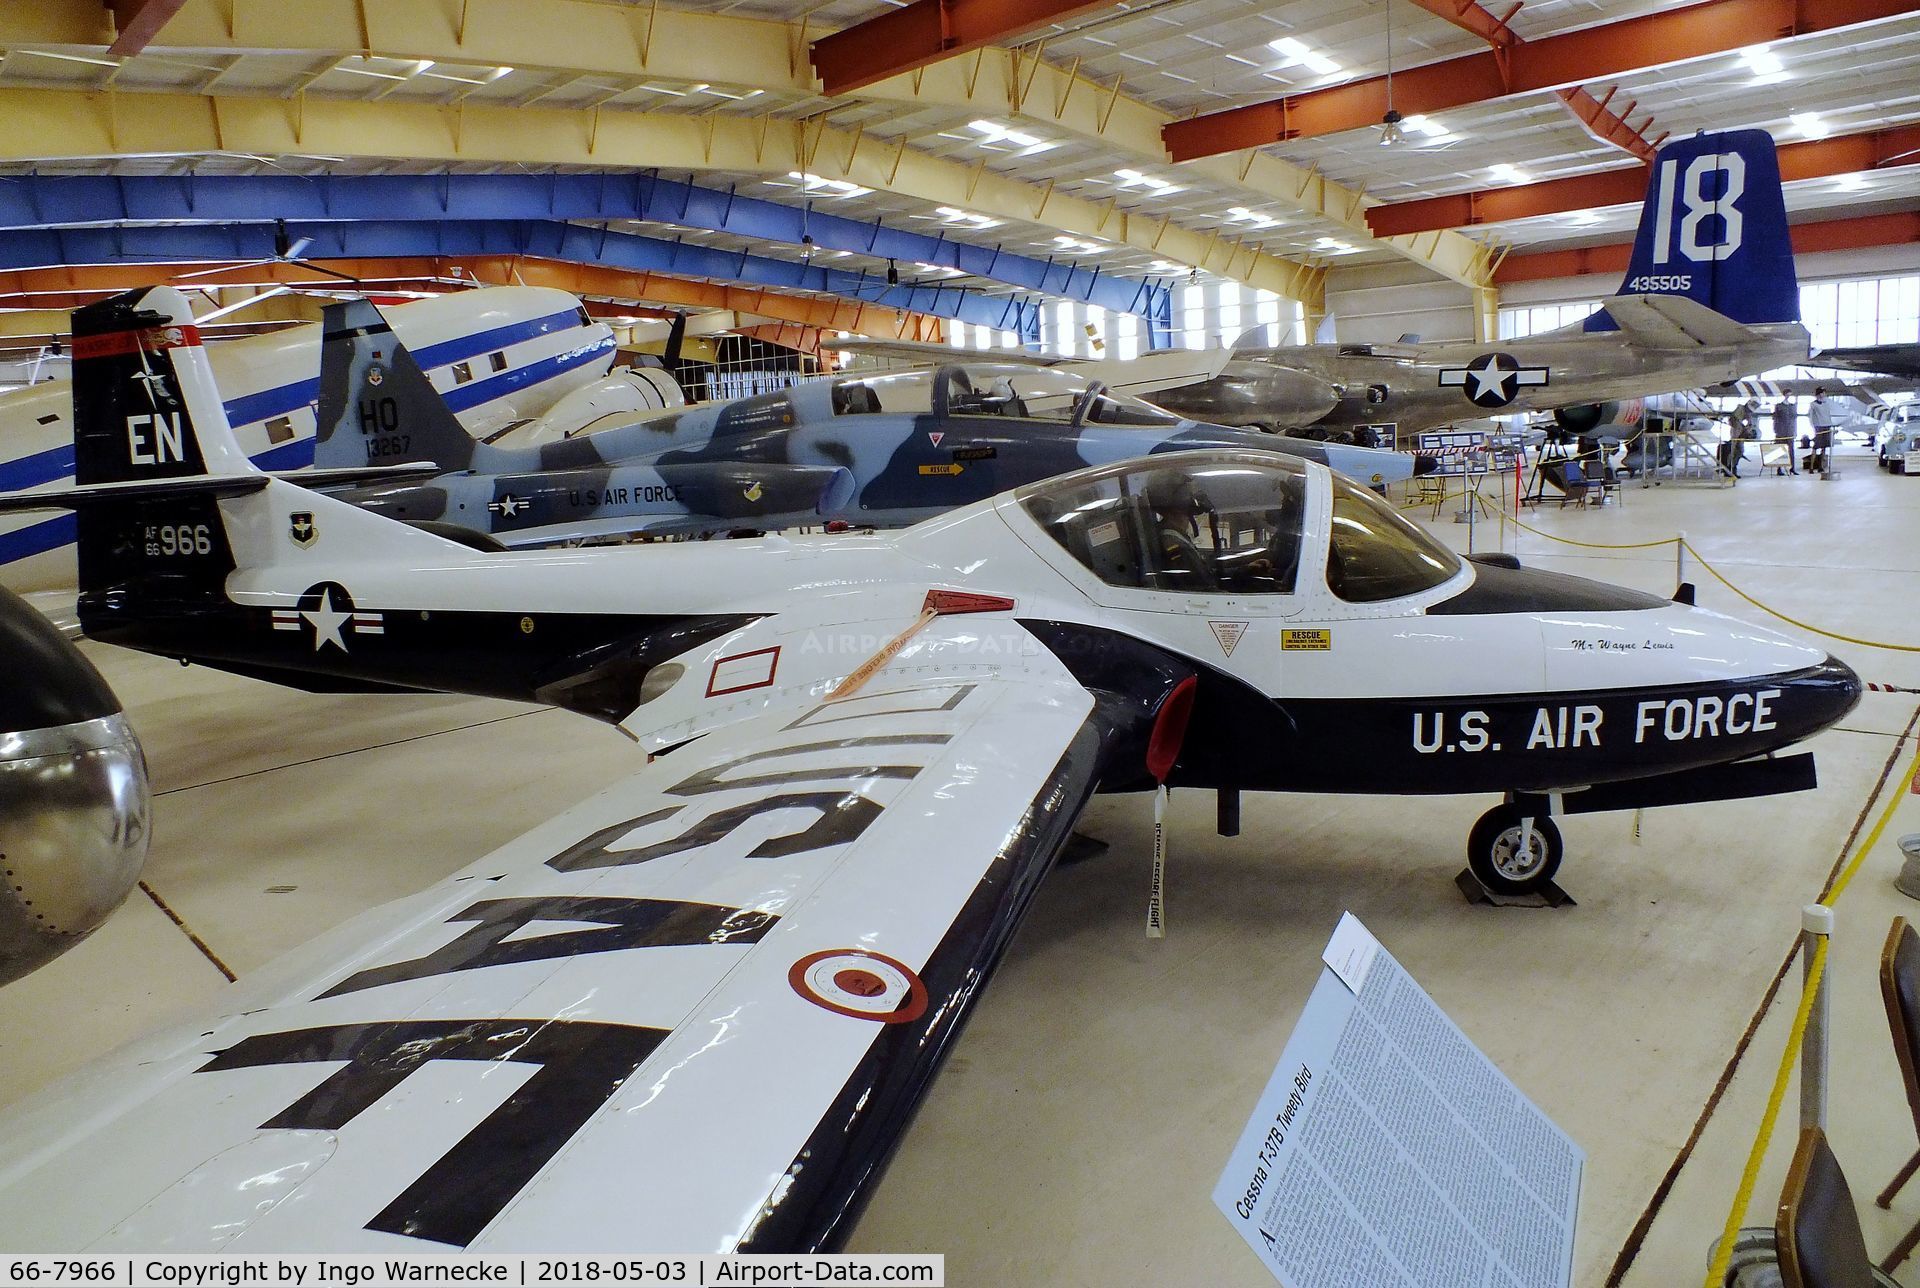 66-7966, 1966 Cessna T-37B Tweety Bird C/N 40926, Cessna T-37B at the War Eagles Air Museum, Santa Teresa NM